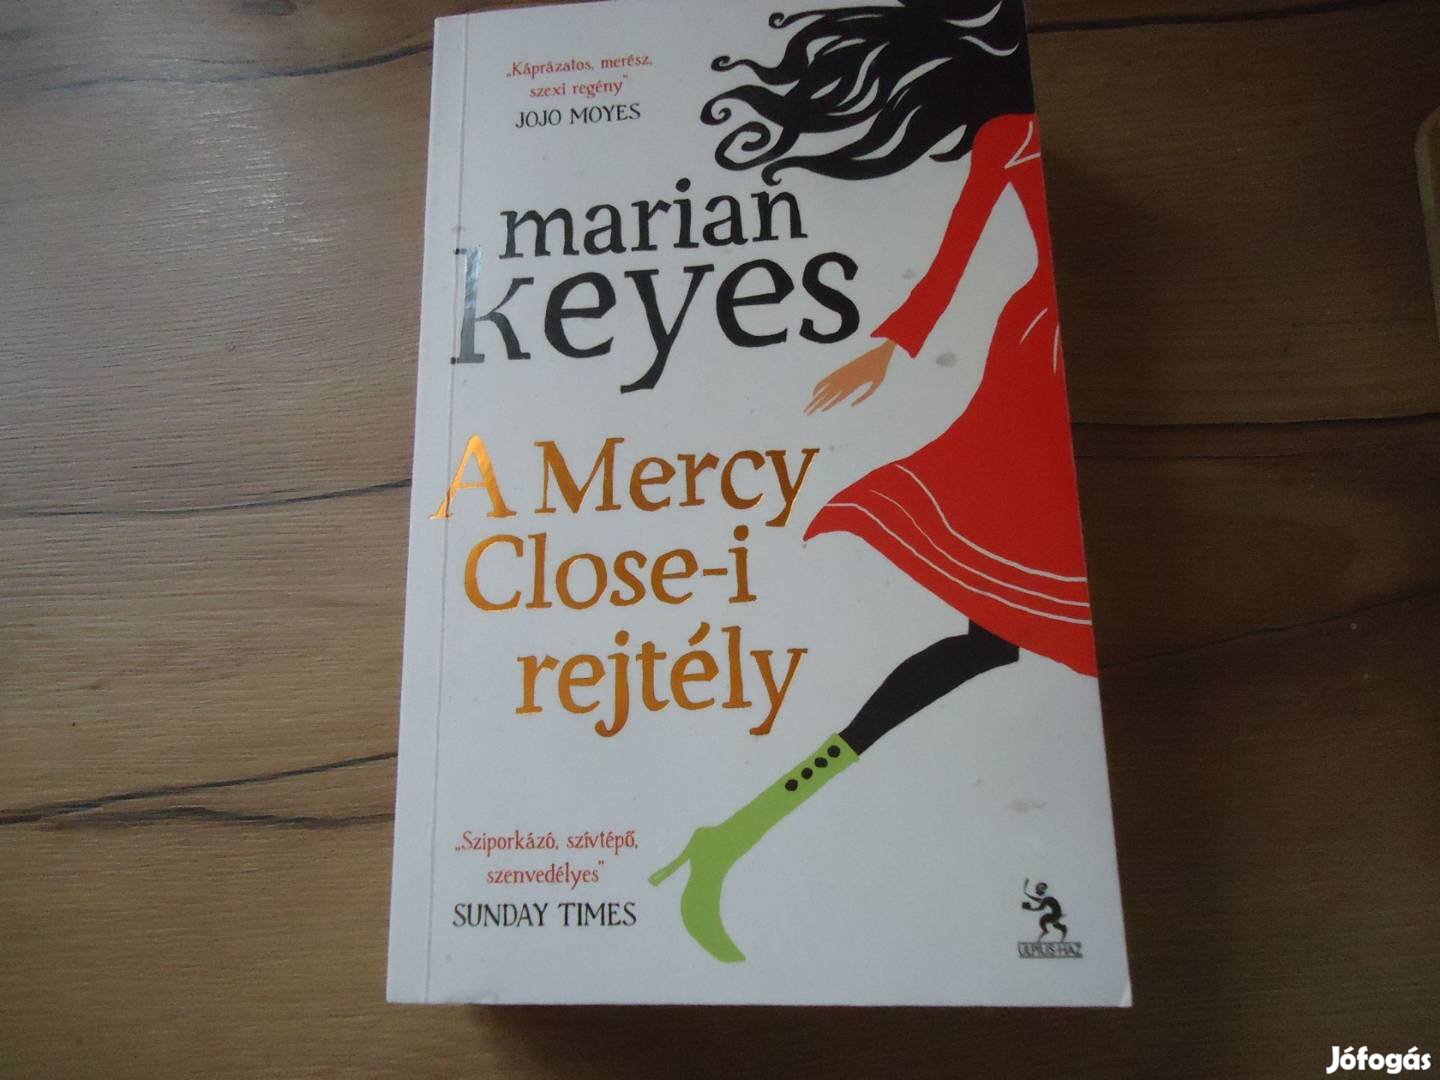 Marian Keyes: A Mercy Close-i rejtély